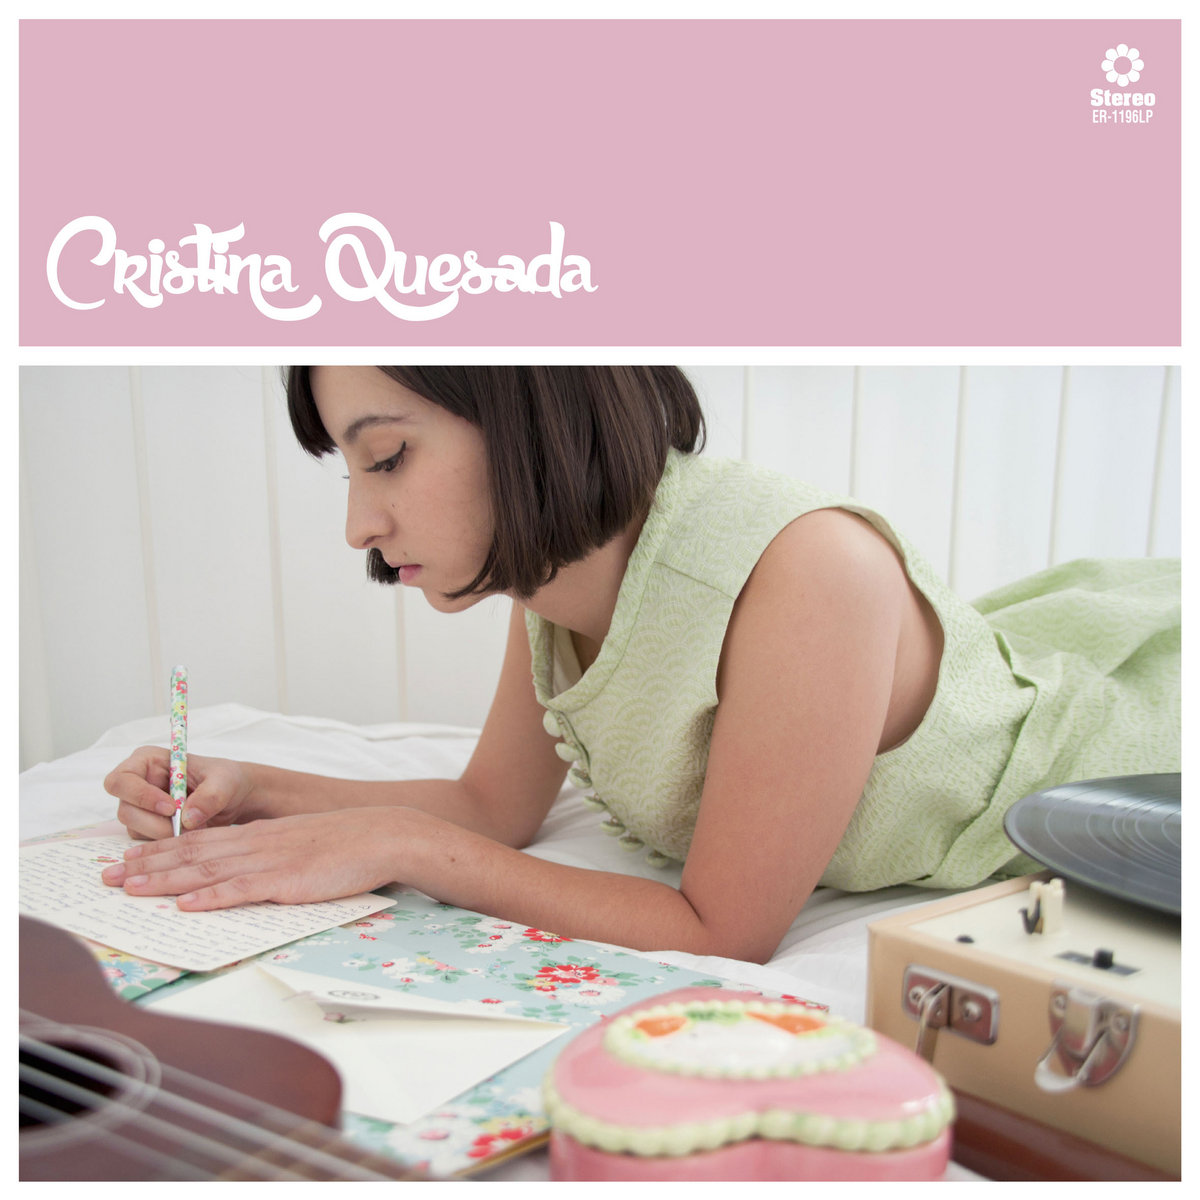 Cristina Quesada "You are the one" LP